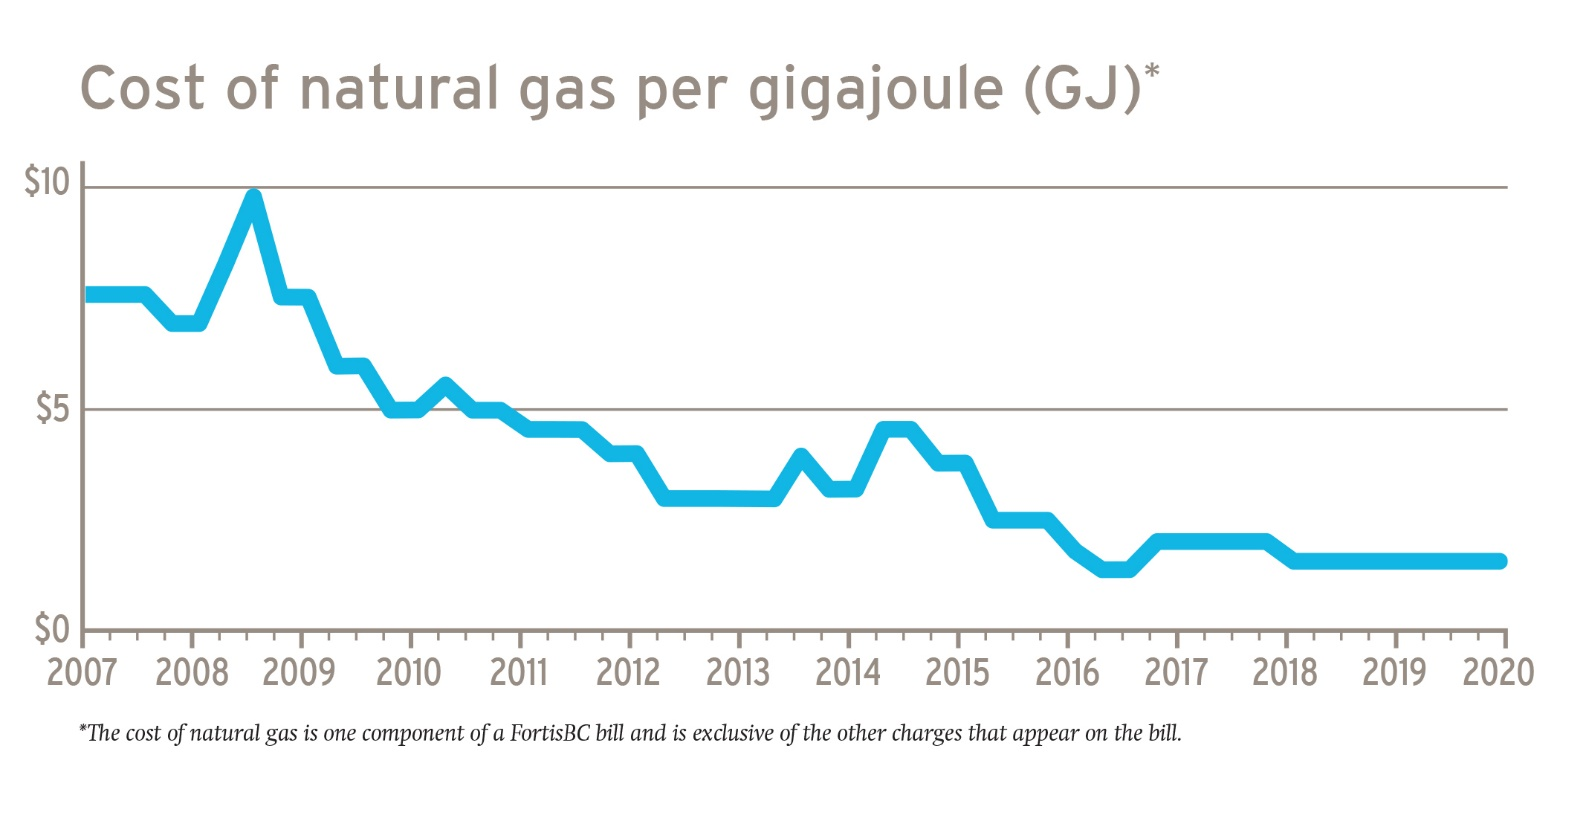 Cost of natural gas per gigajoule (GJ)*